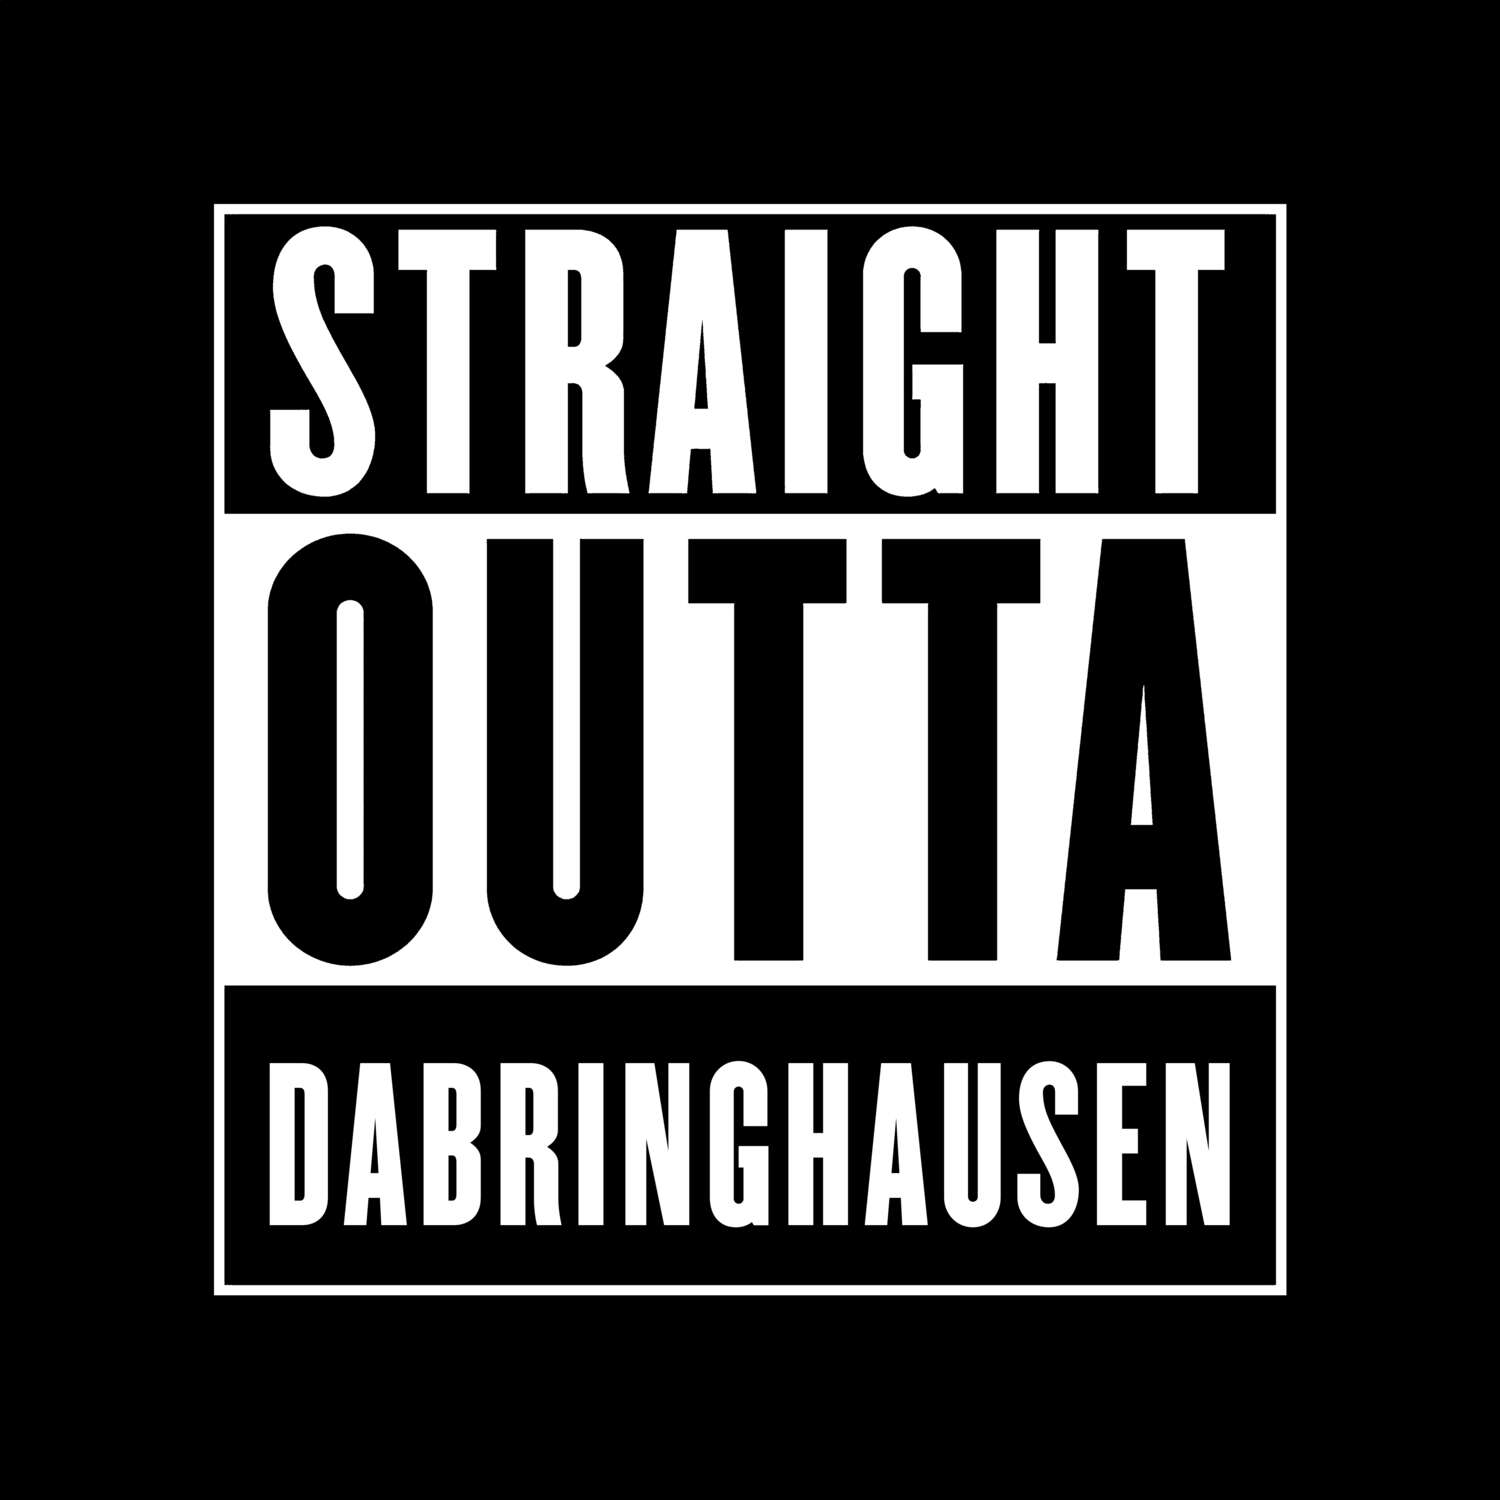 Dabringhausen T-Shirt »Straight Outta«